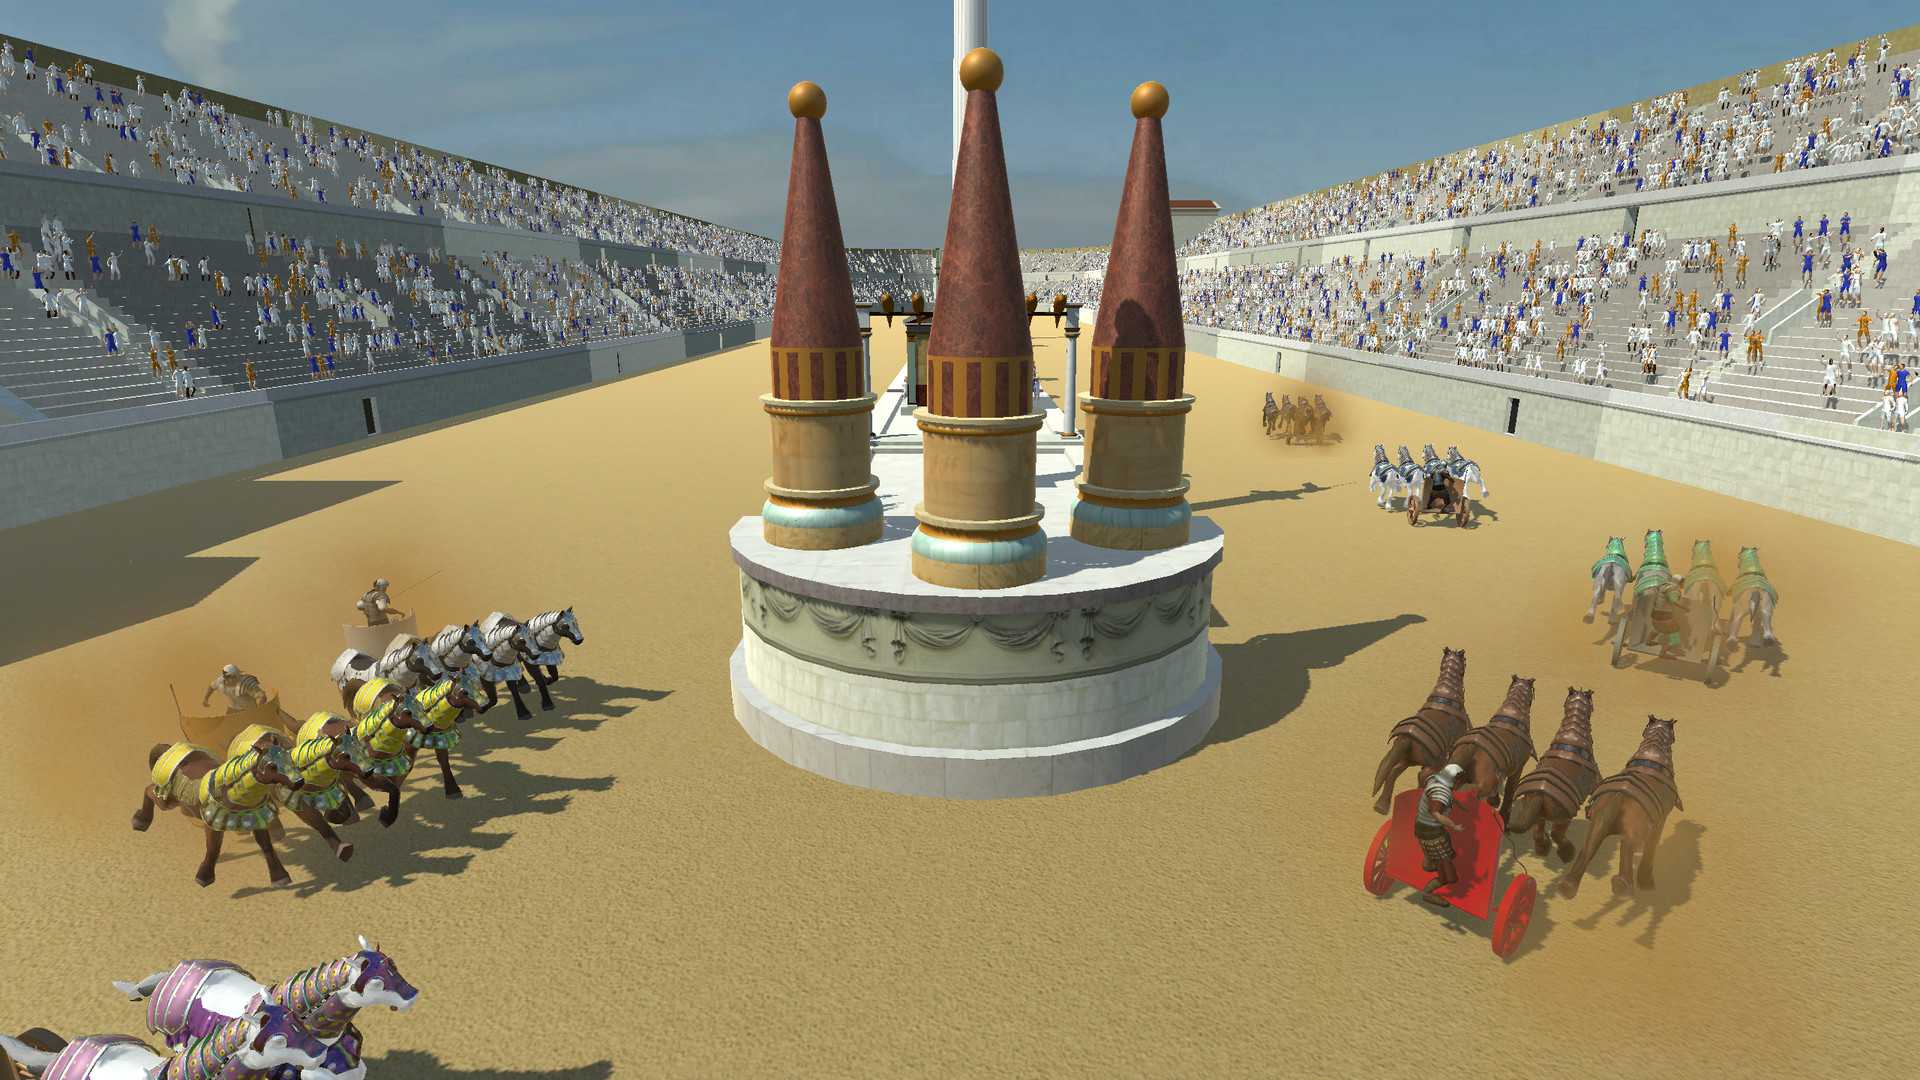 Rome Circus Maximus: Chariot Race VR